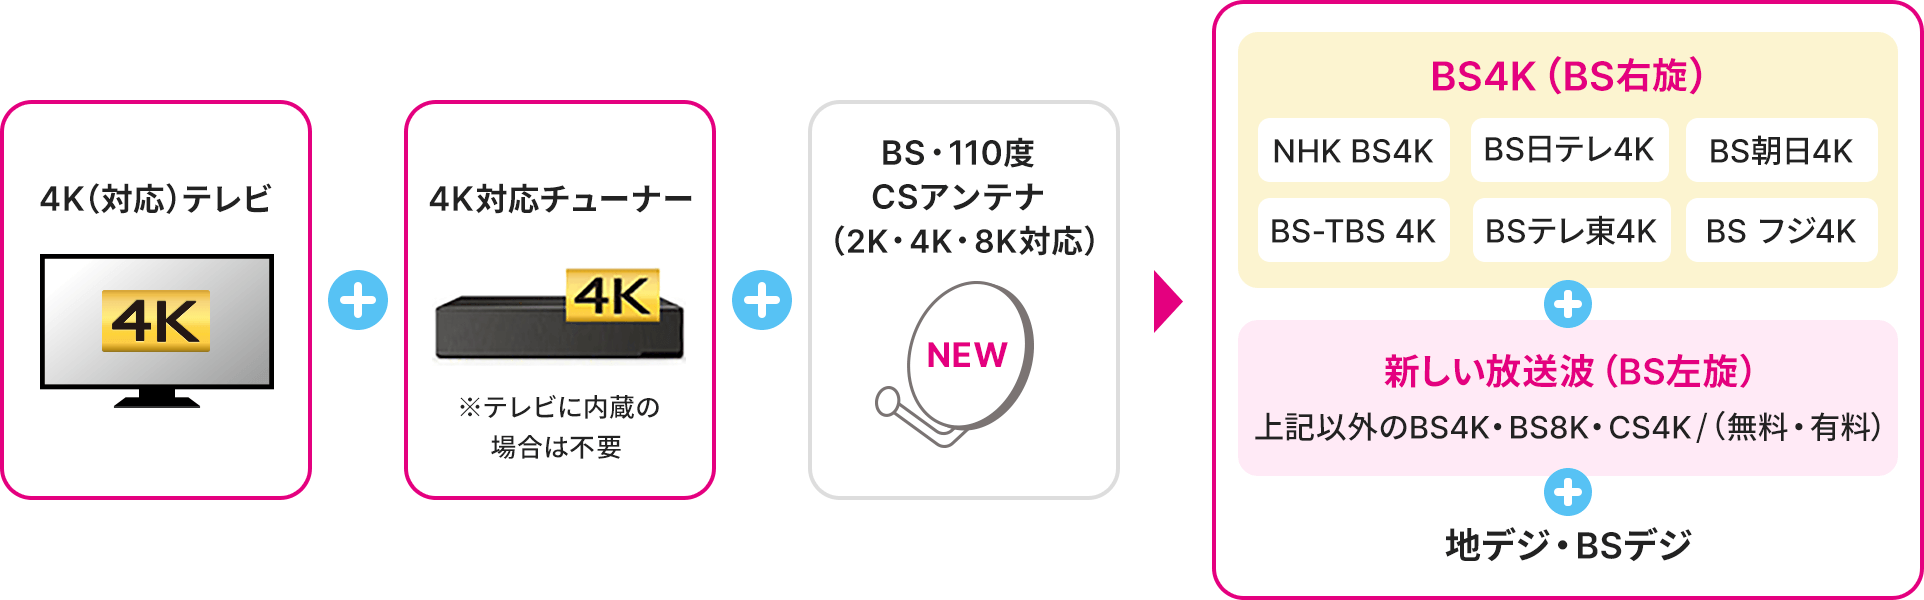 4K(対応)テレビ＋4K対応チューナー＋BS・110度CSアンテナ(2K・4K・8K対応)→BS4K(BS右旋):NHK BS4K,BS朝日 4K,BS-TBS 4K,BS テレ東 4K,BSフジ4K＋新しい放送波(BS左旋)＋地デジ・BSデジ